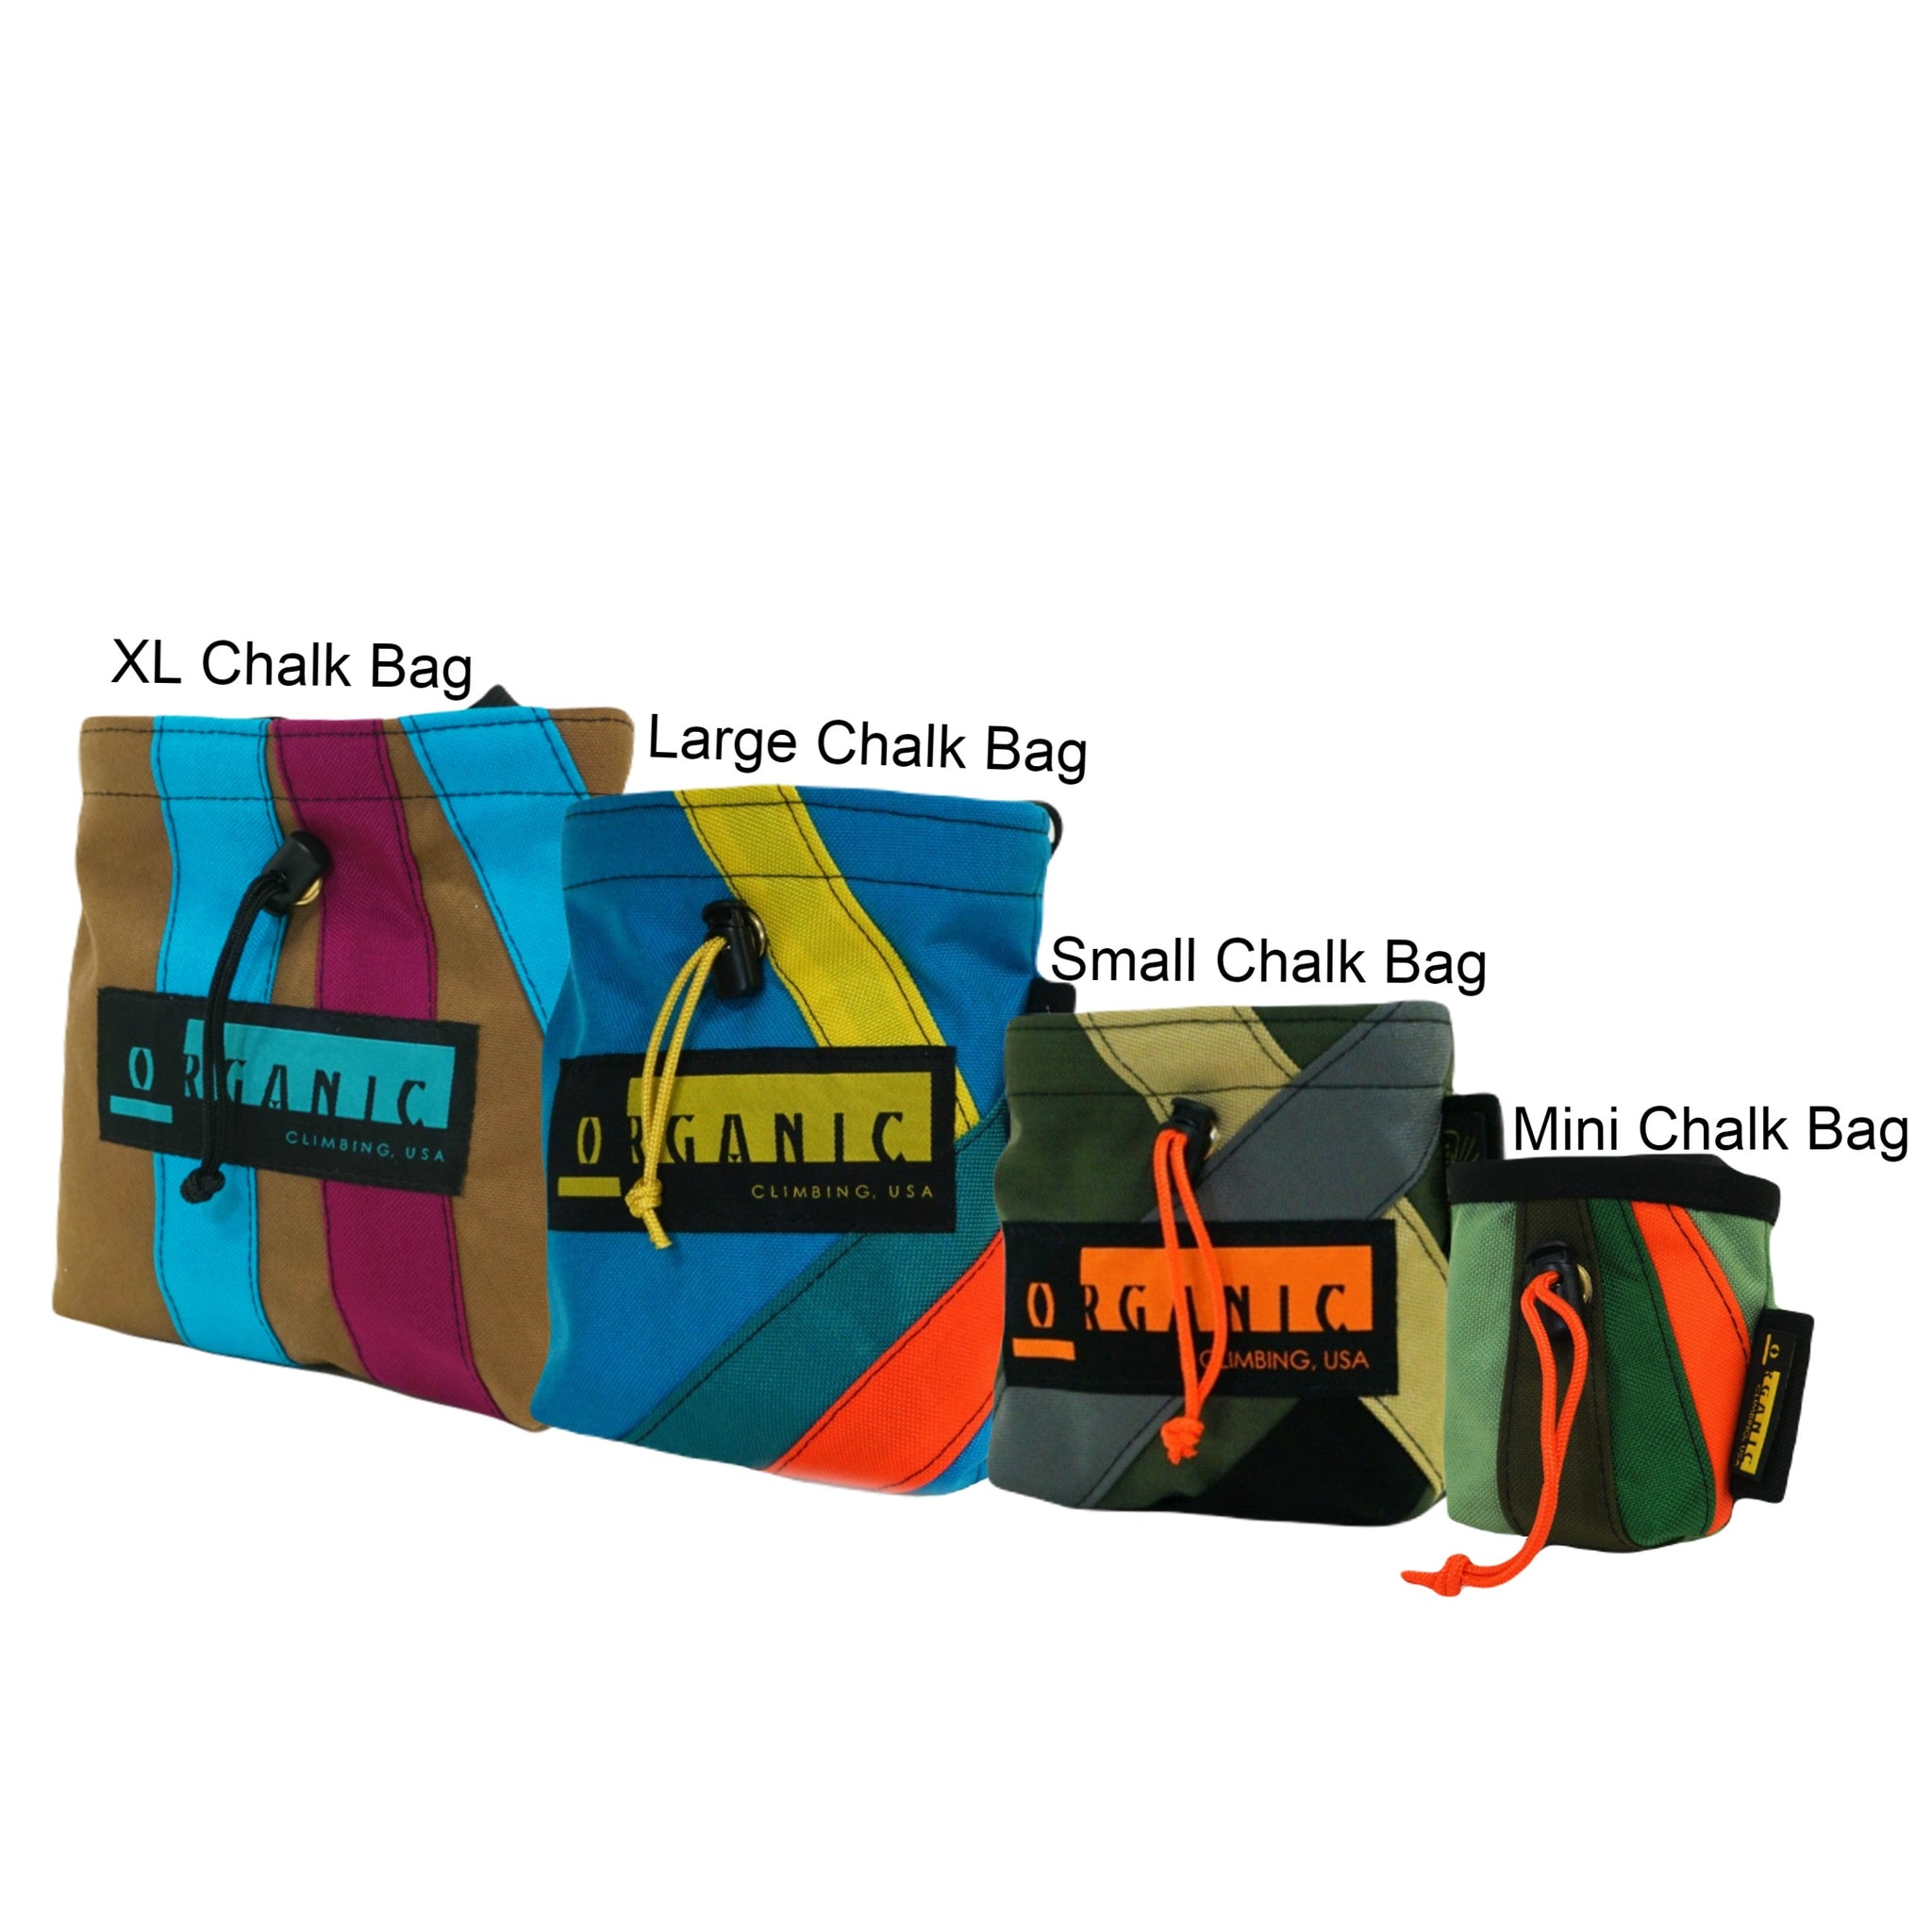 Small (6.5") Chalk Bag - Customizable Colors